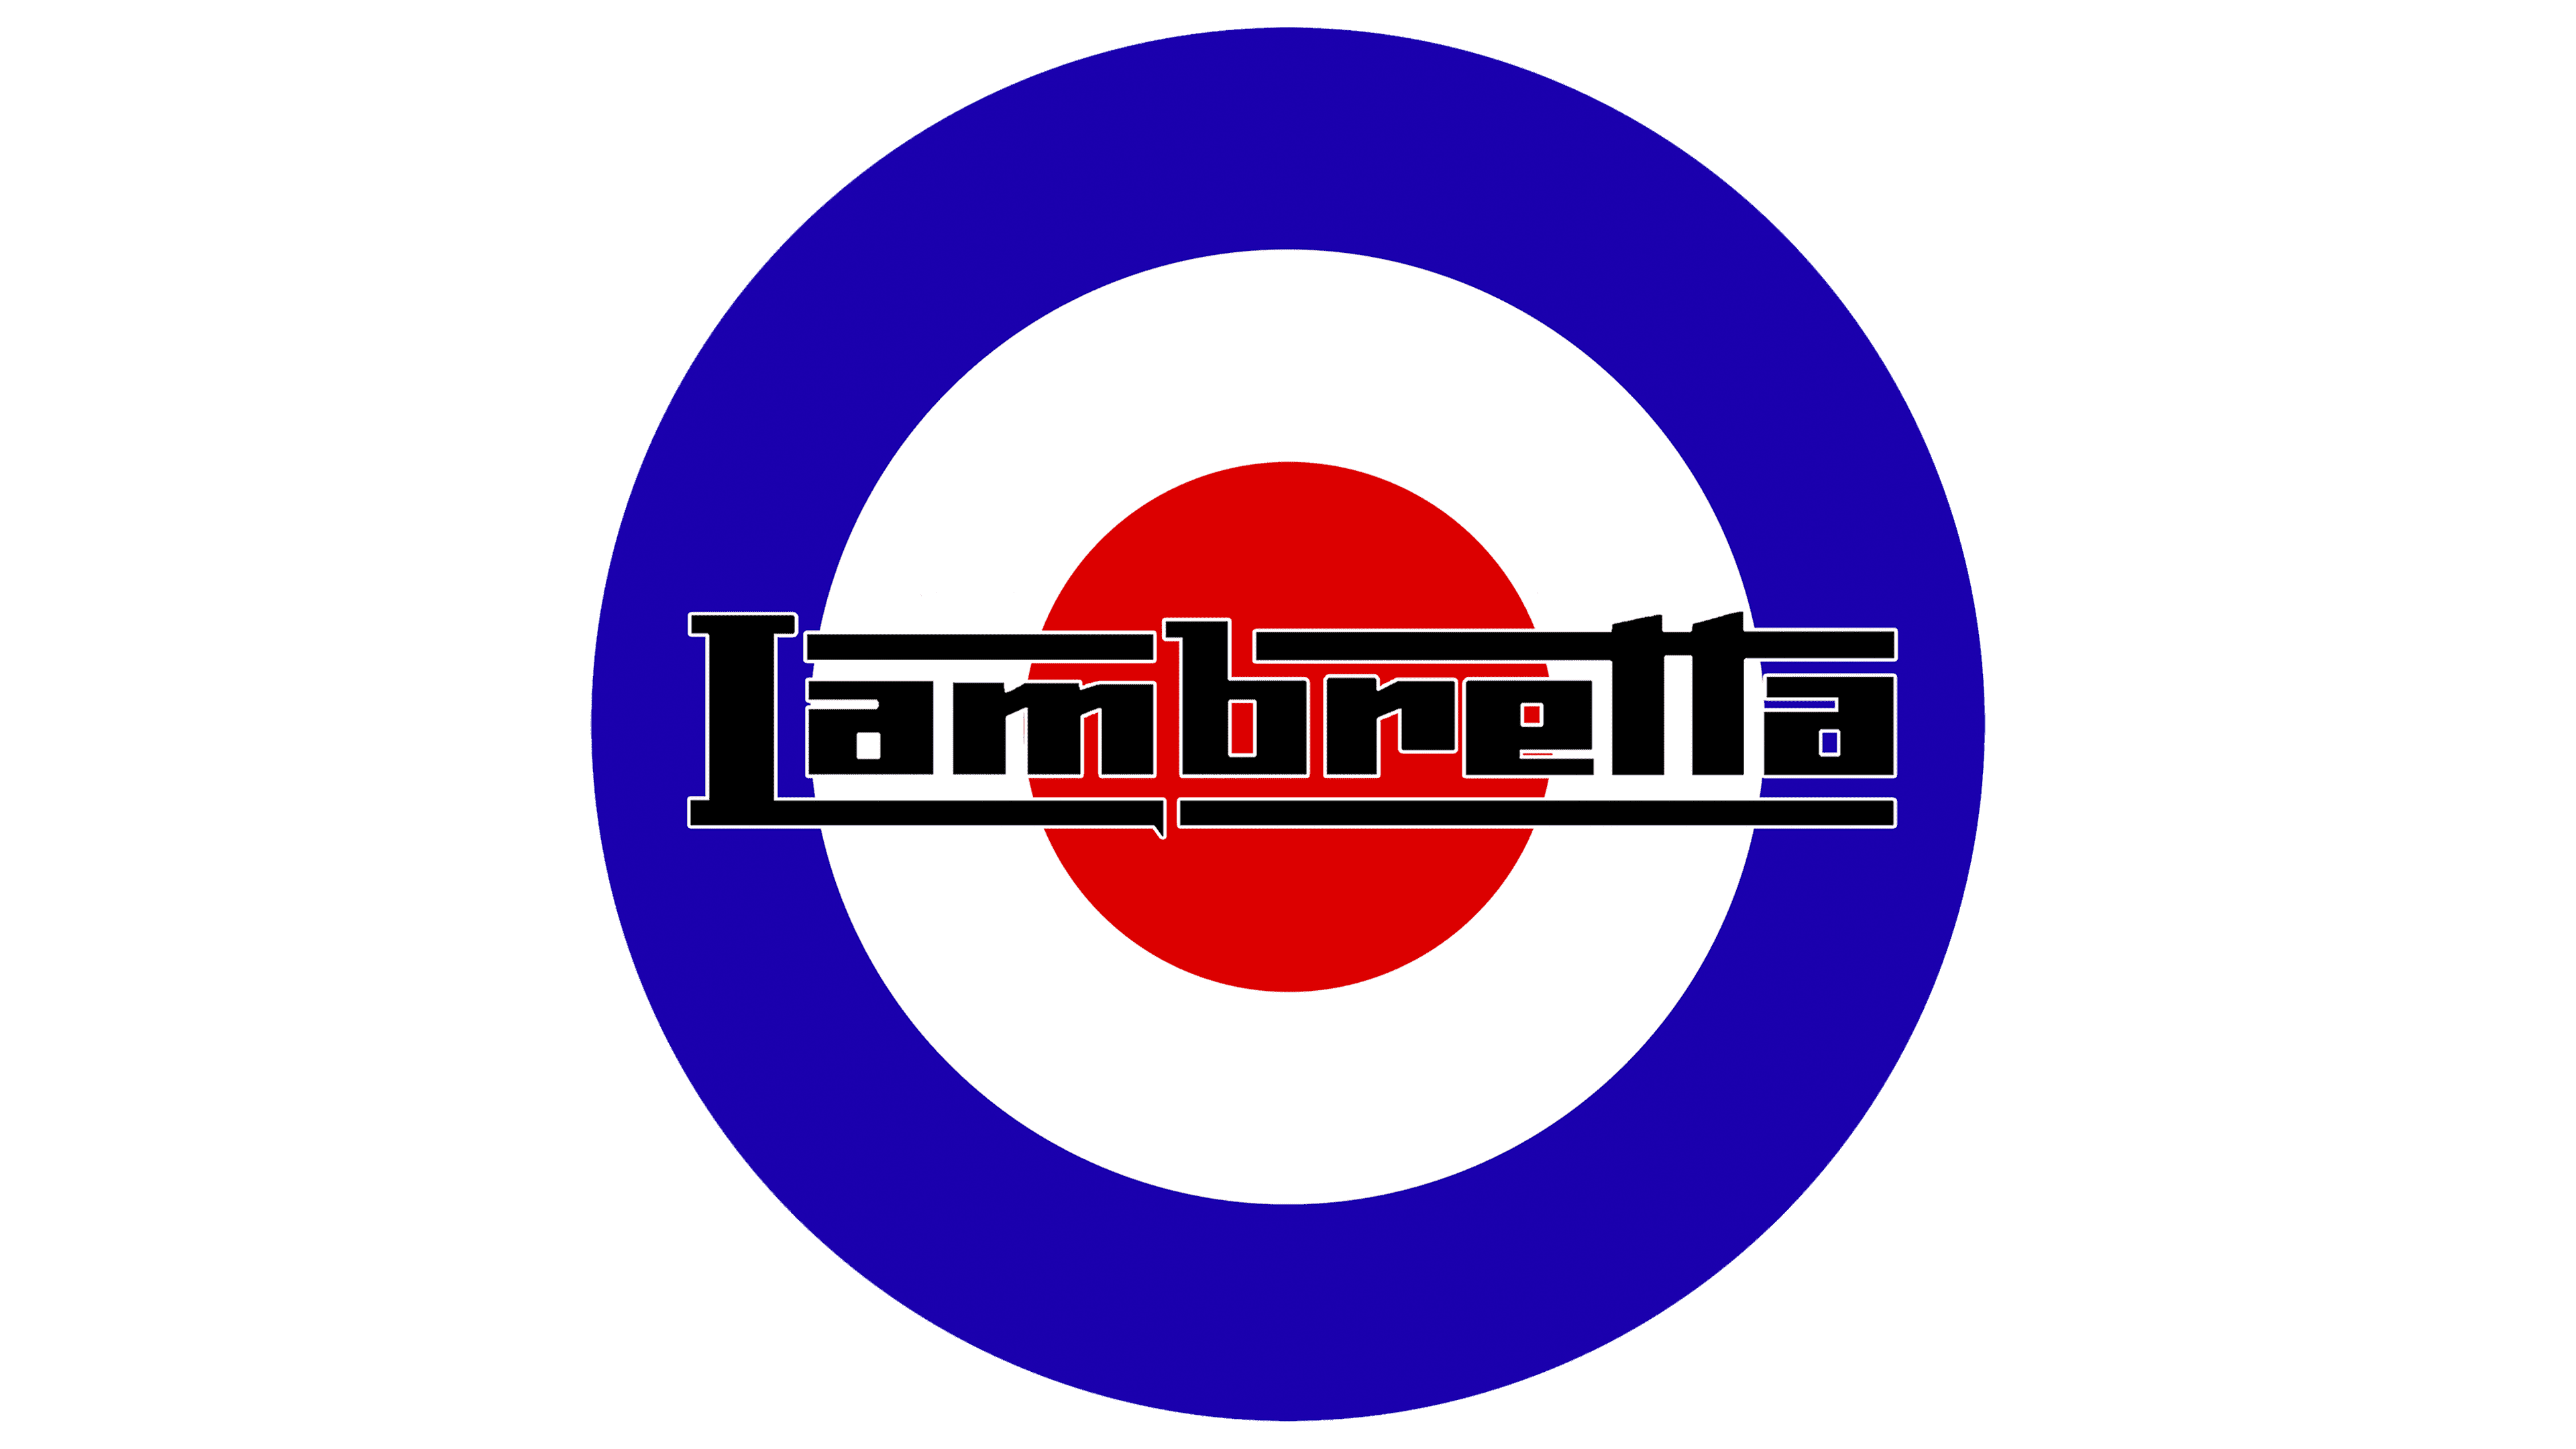 Lambretta-Emblem